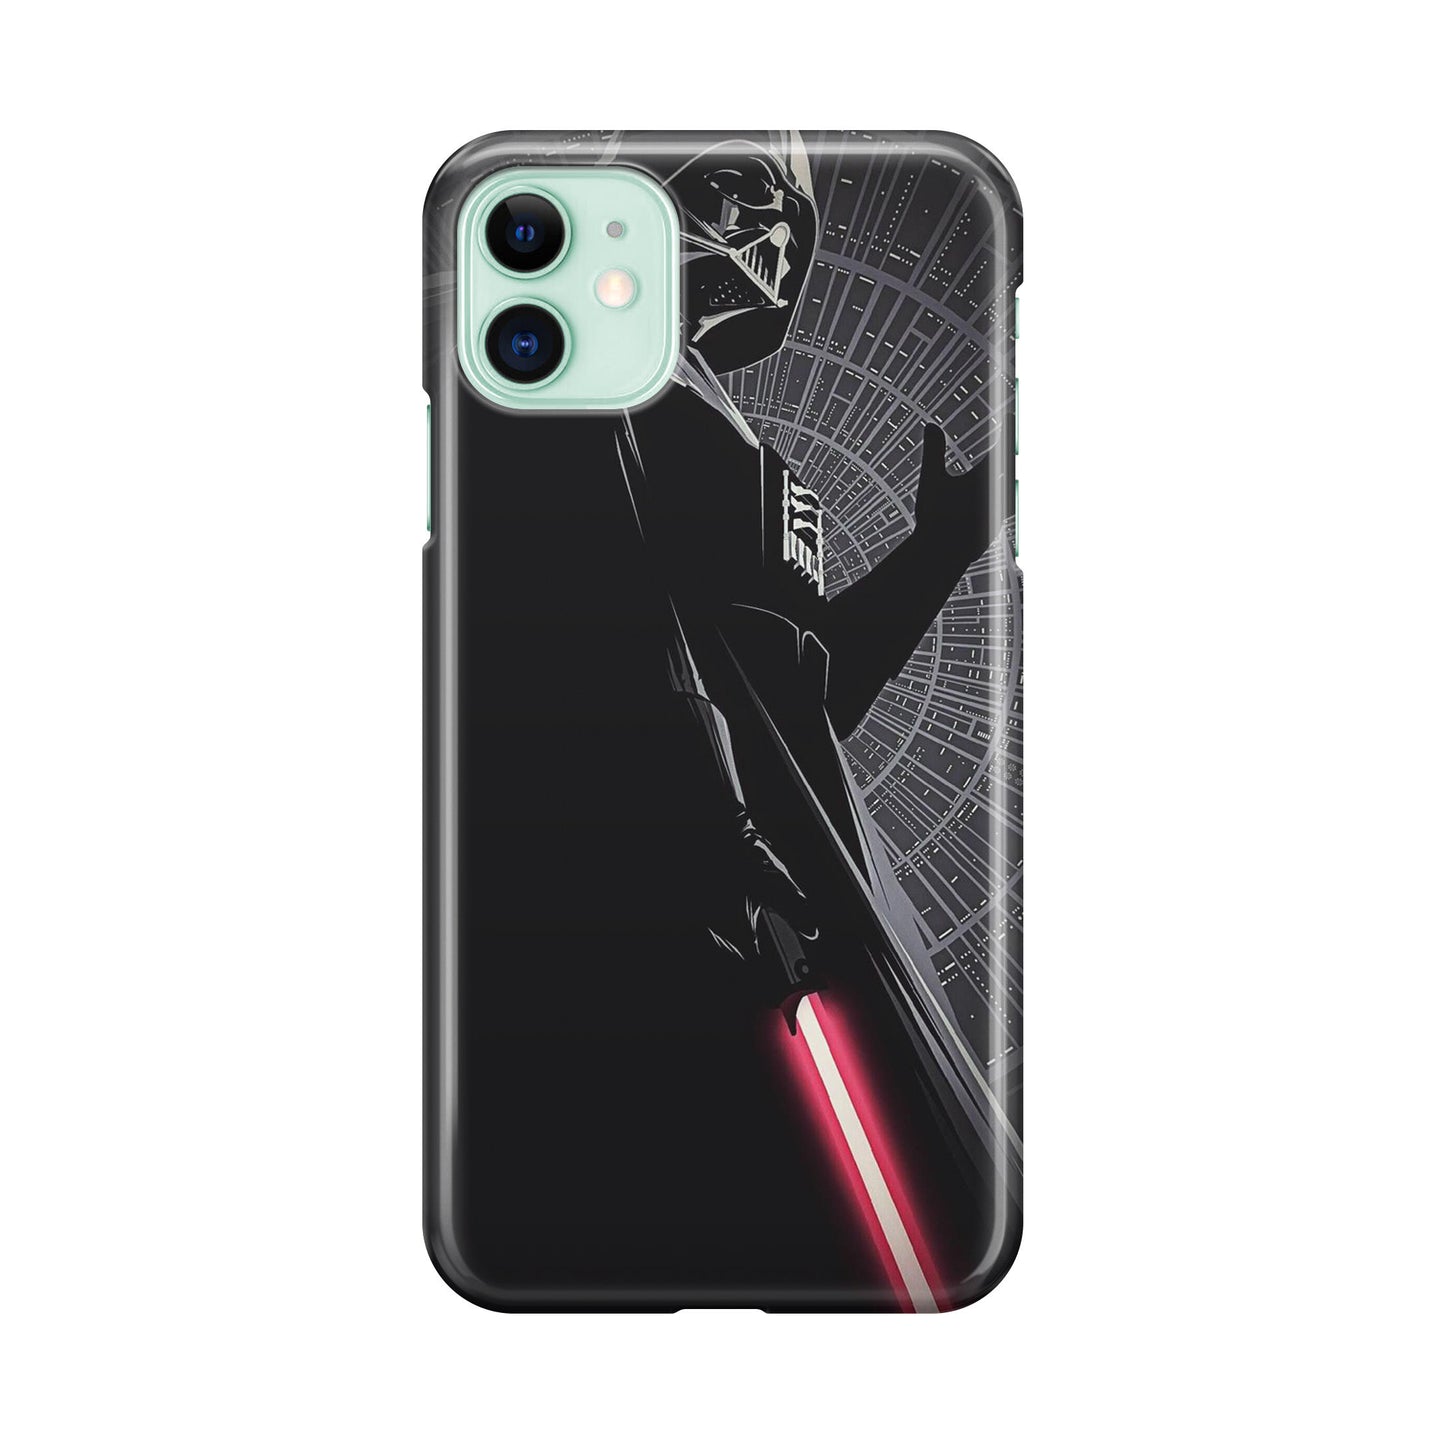 Vader Fan Art iPhone 11 Case